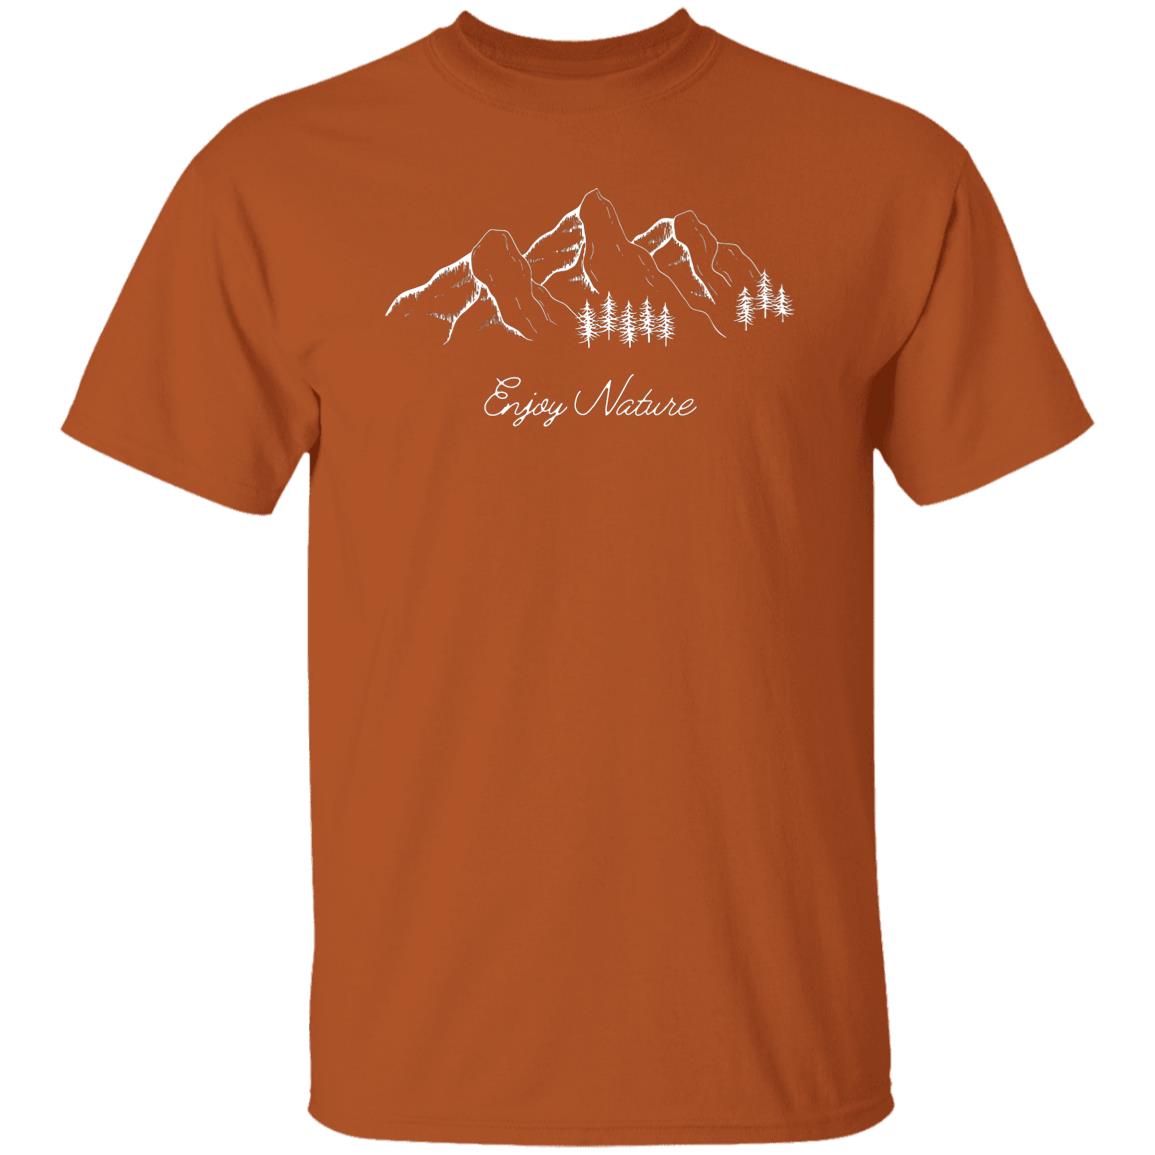 Enjoy Nature T-Shirt | Gift For Him